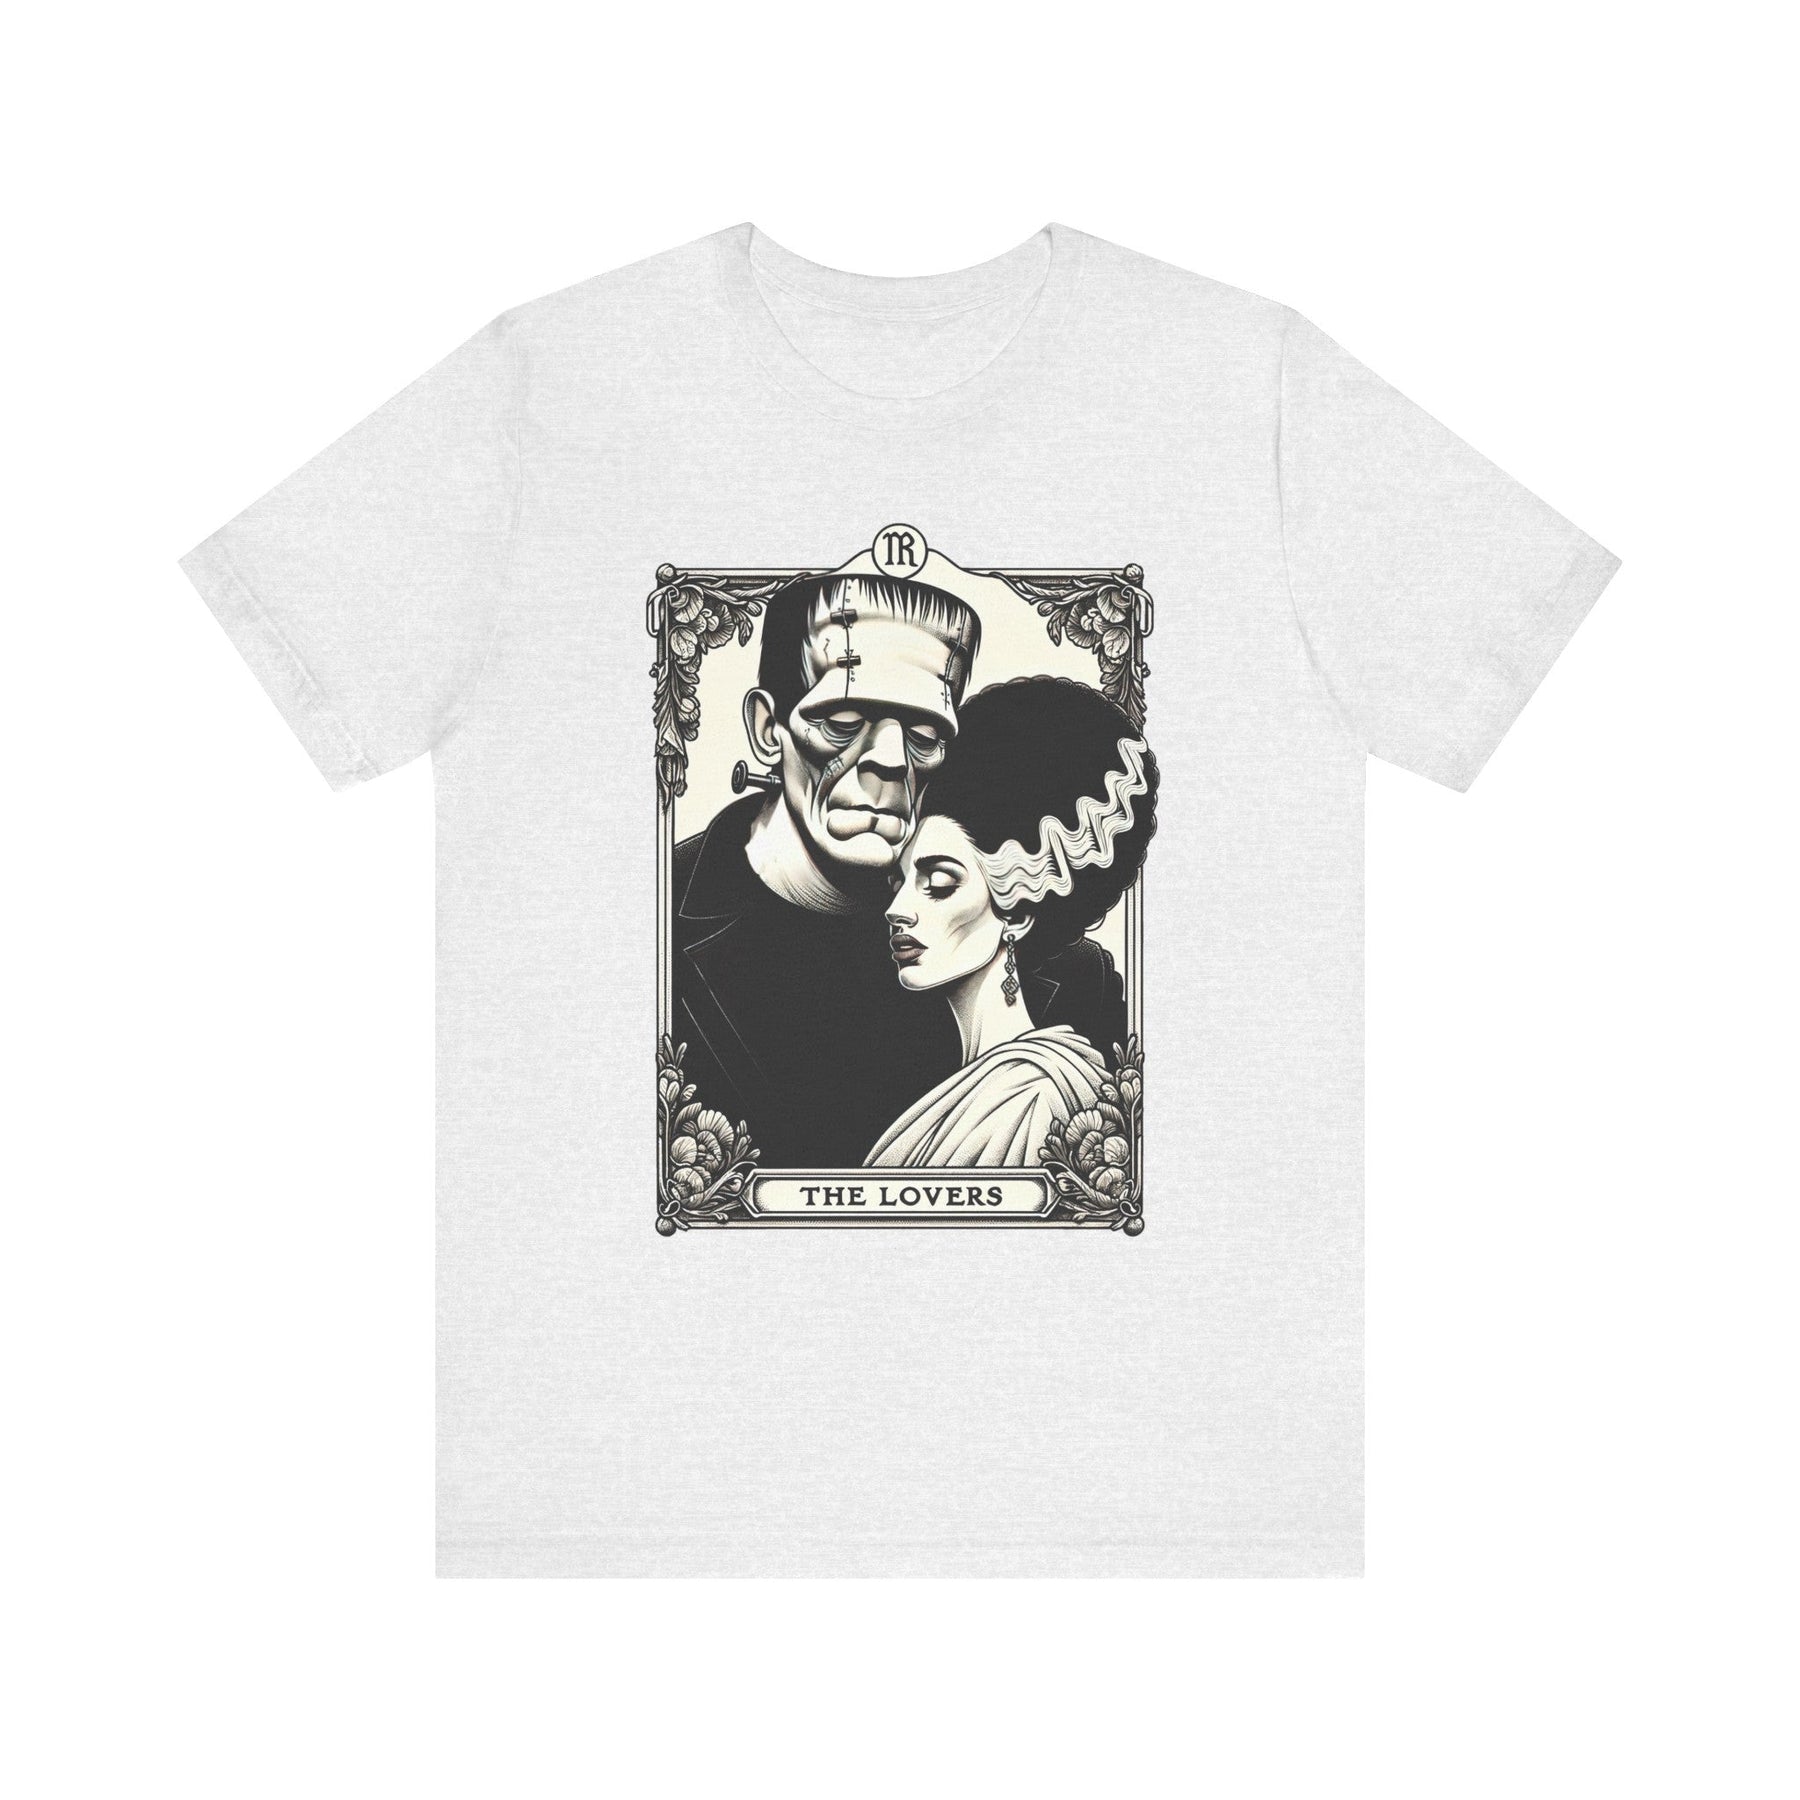 'The Lovers' Frankenstein & Bride Tarot Card Tee - Goth Cloth Co.T - Shirt11046521018496738394